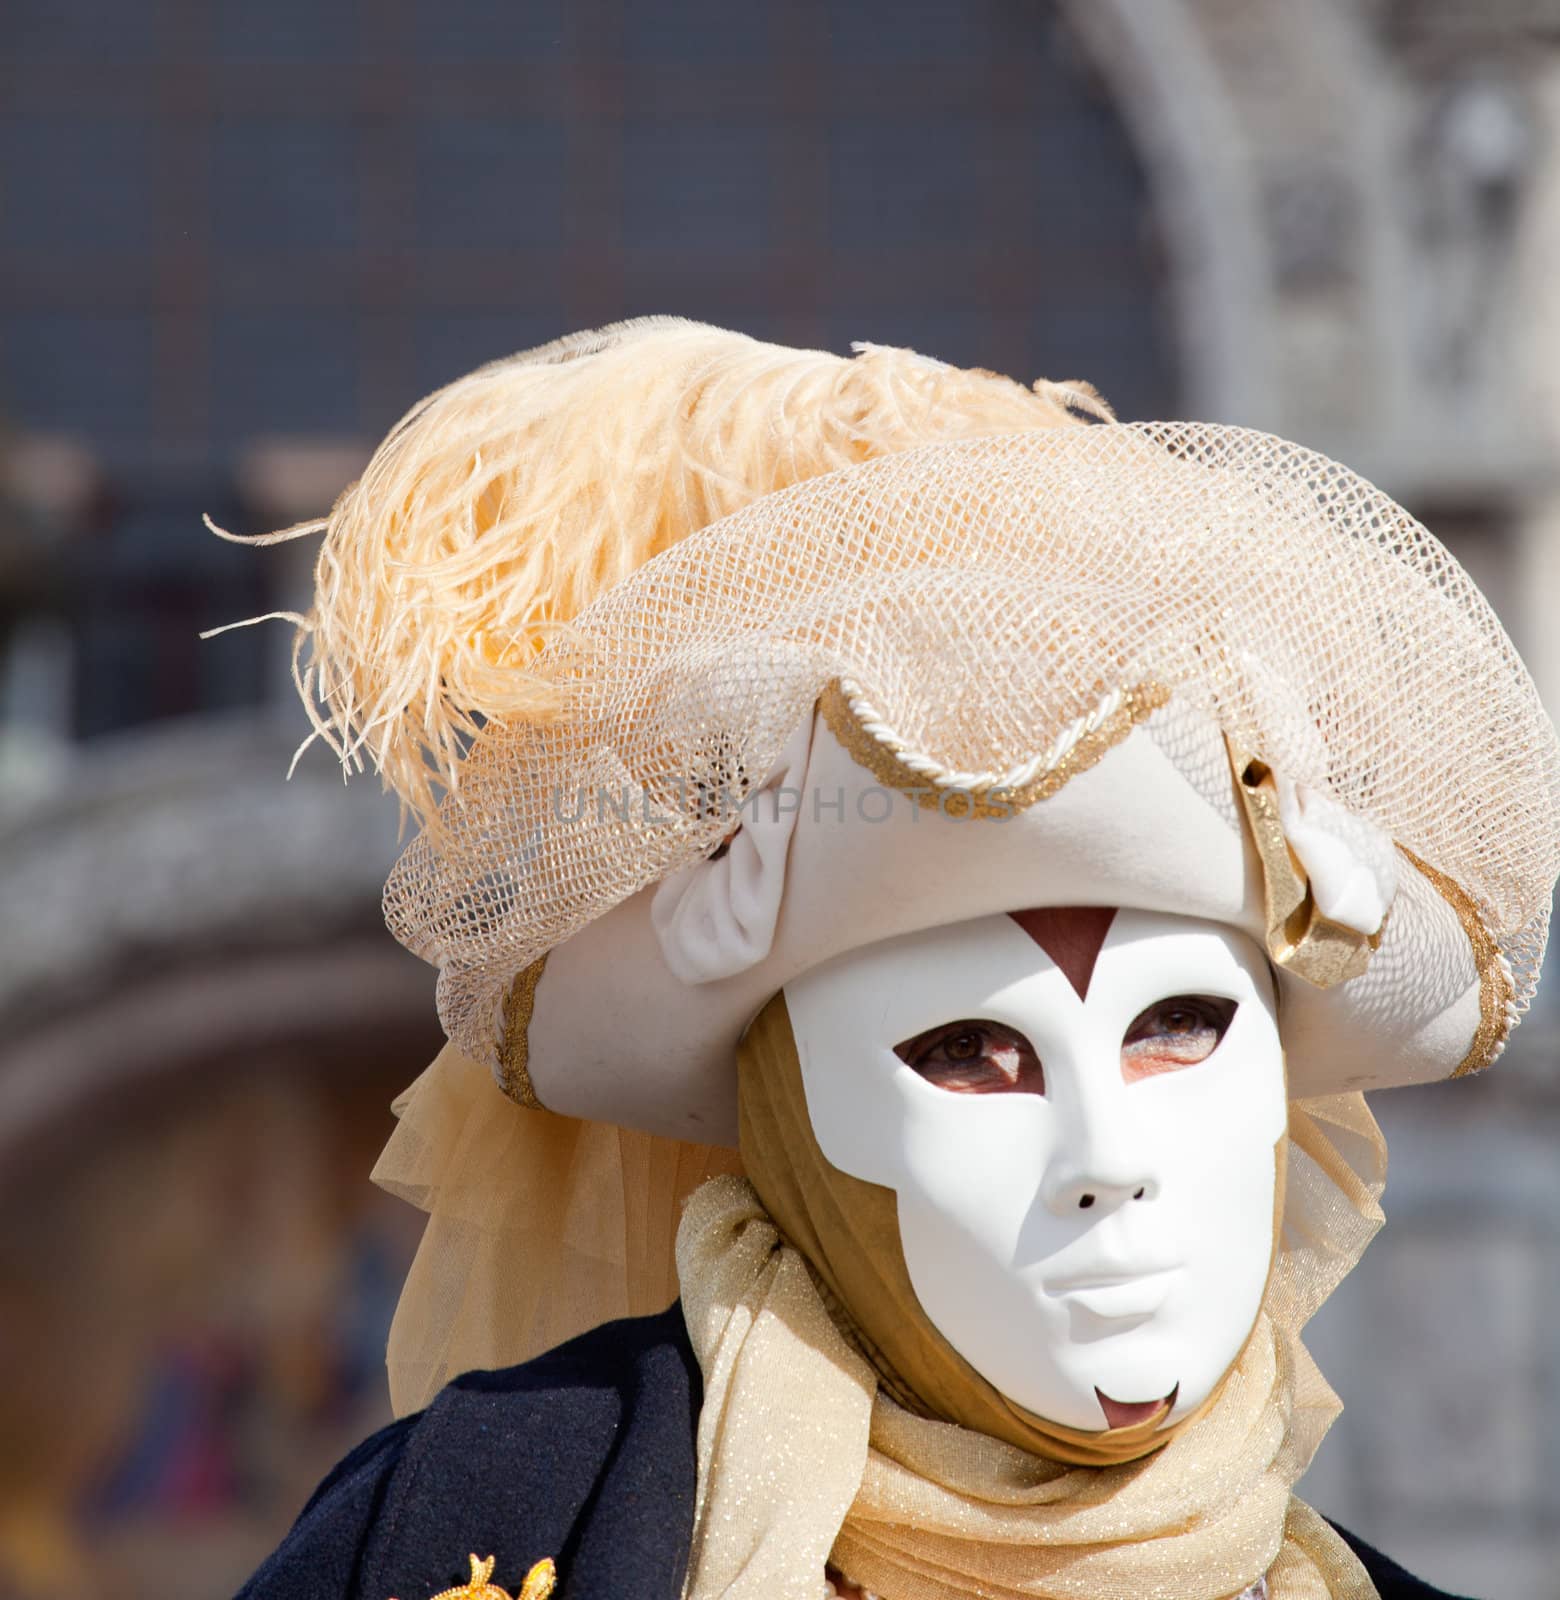 Venice carnival by bepsimage